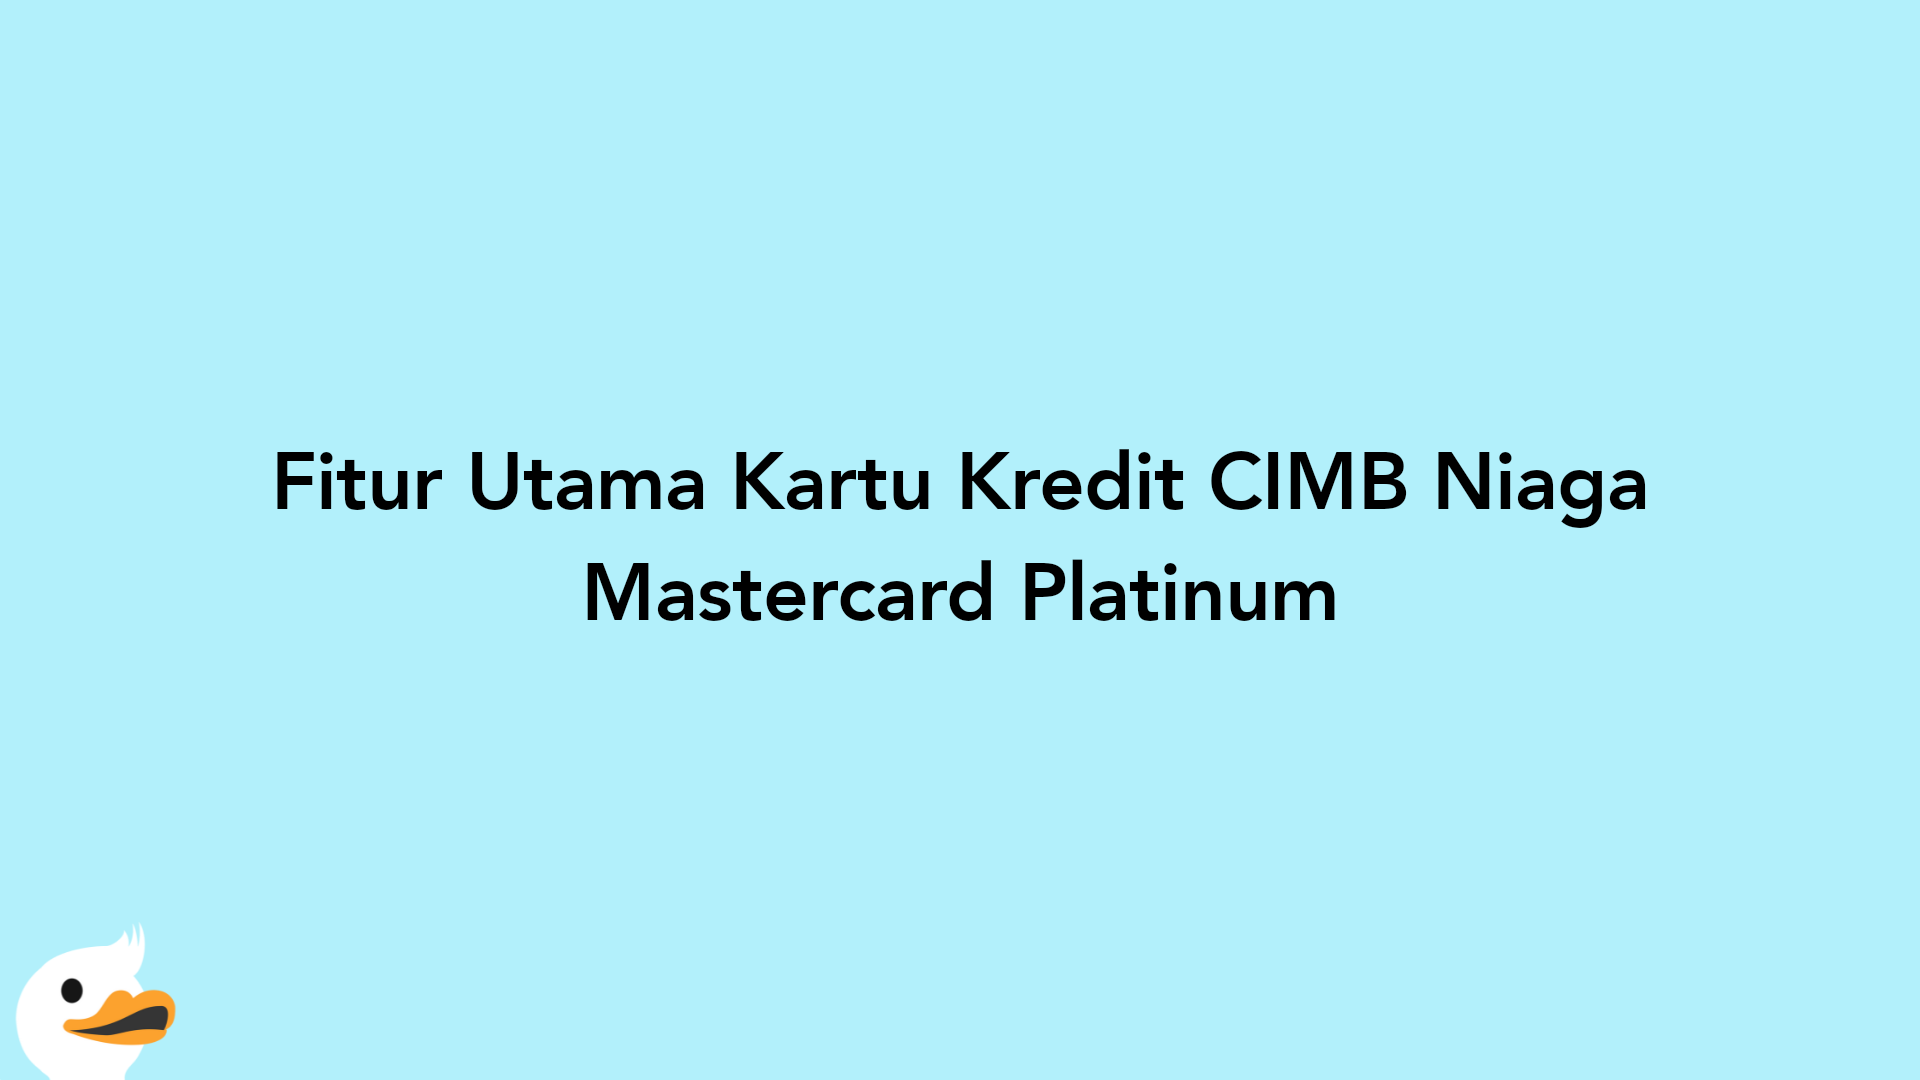 Fitur Utama Kartu Kredit CIMB Niaga Mastercard Platinum